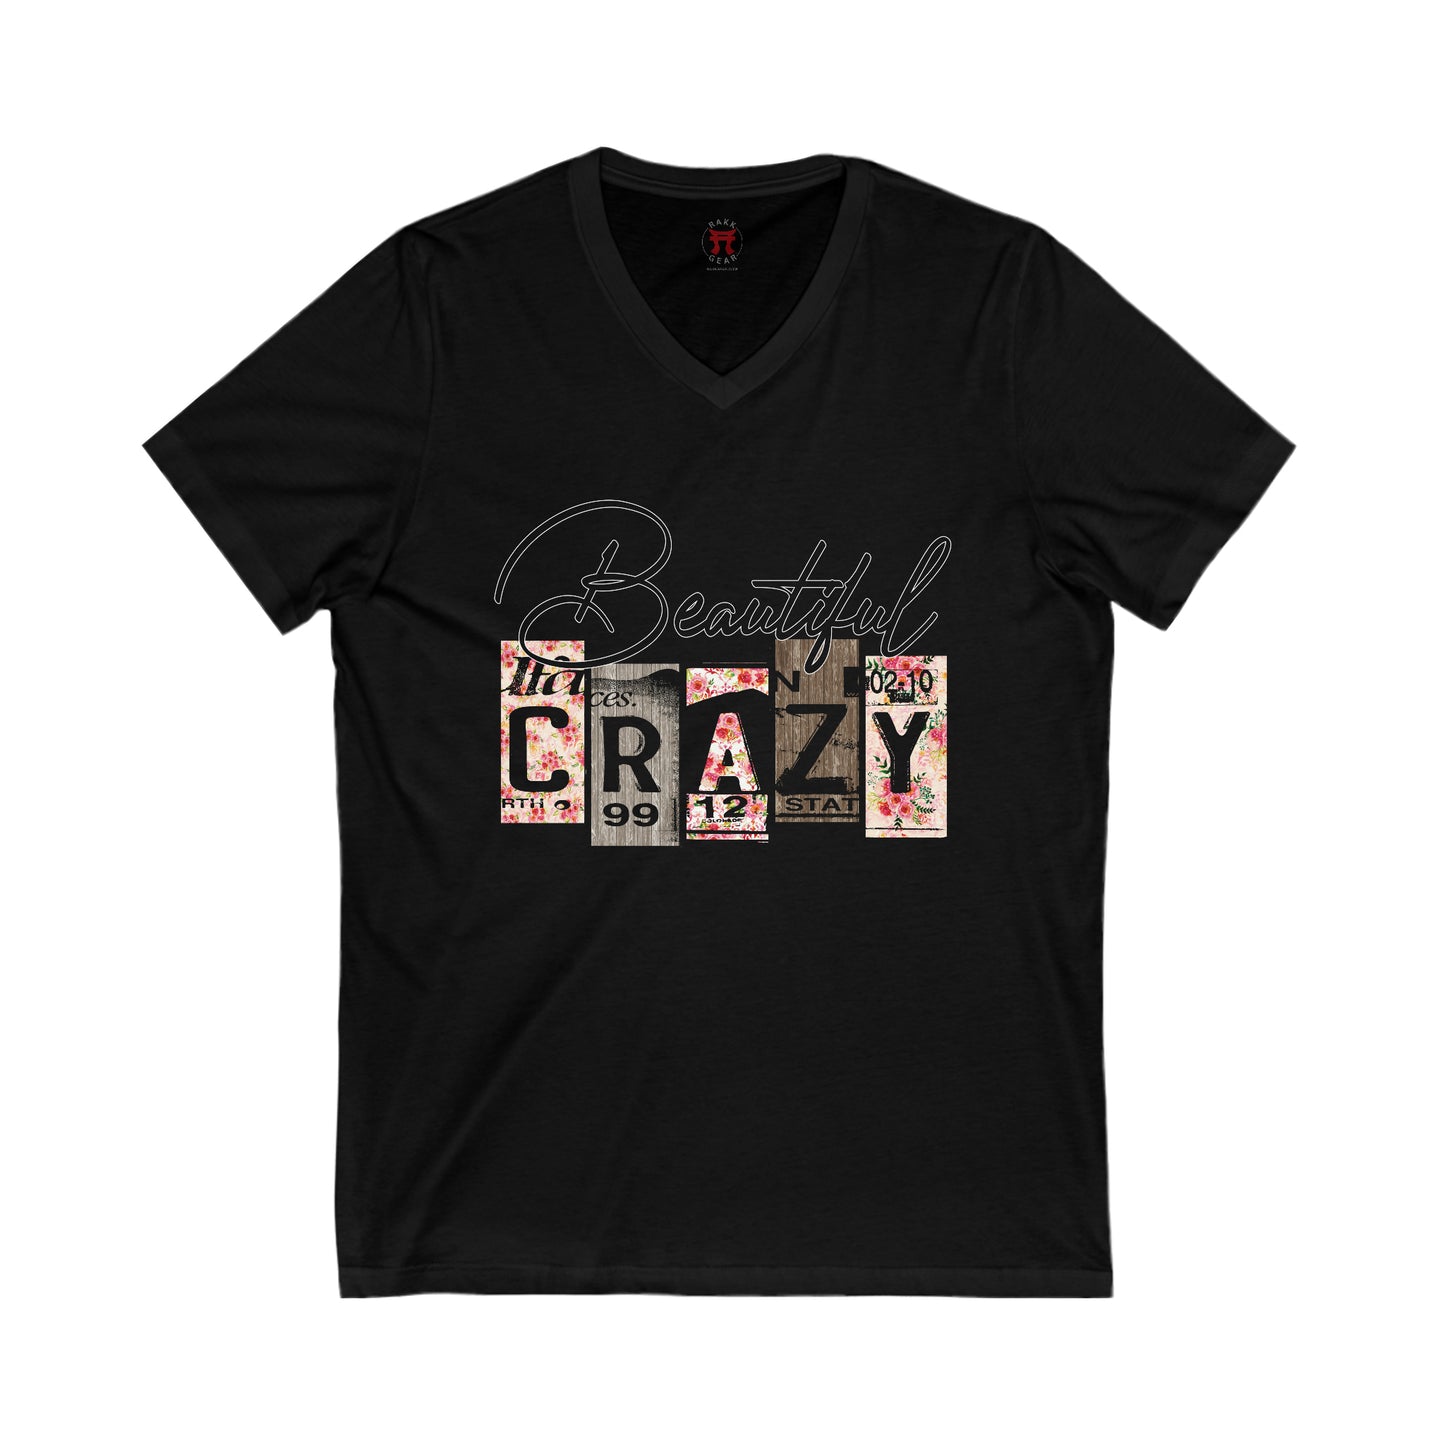 Rakkgear "Beautiful Crazy" Women's Black V-Neck T-shirt